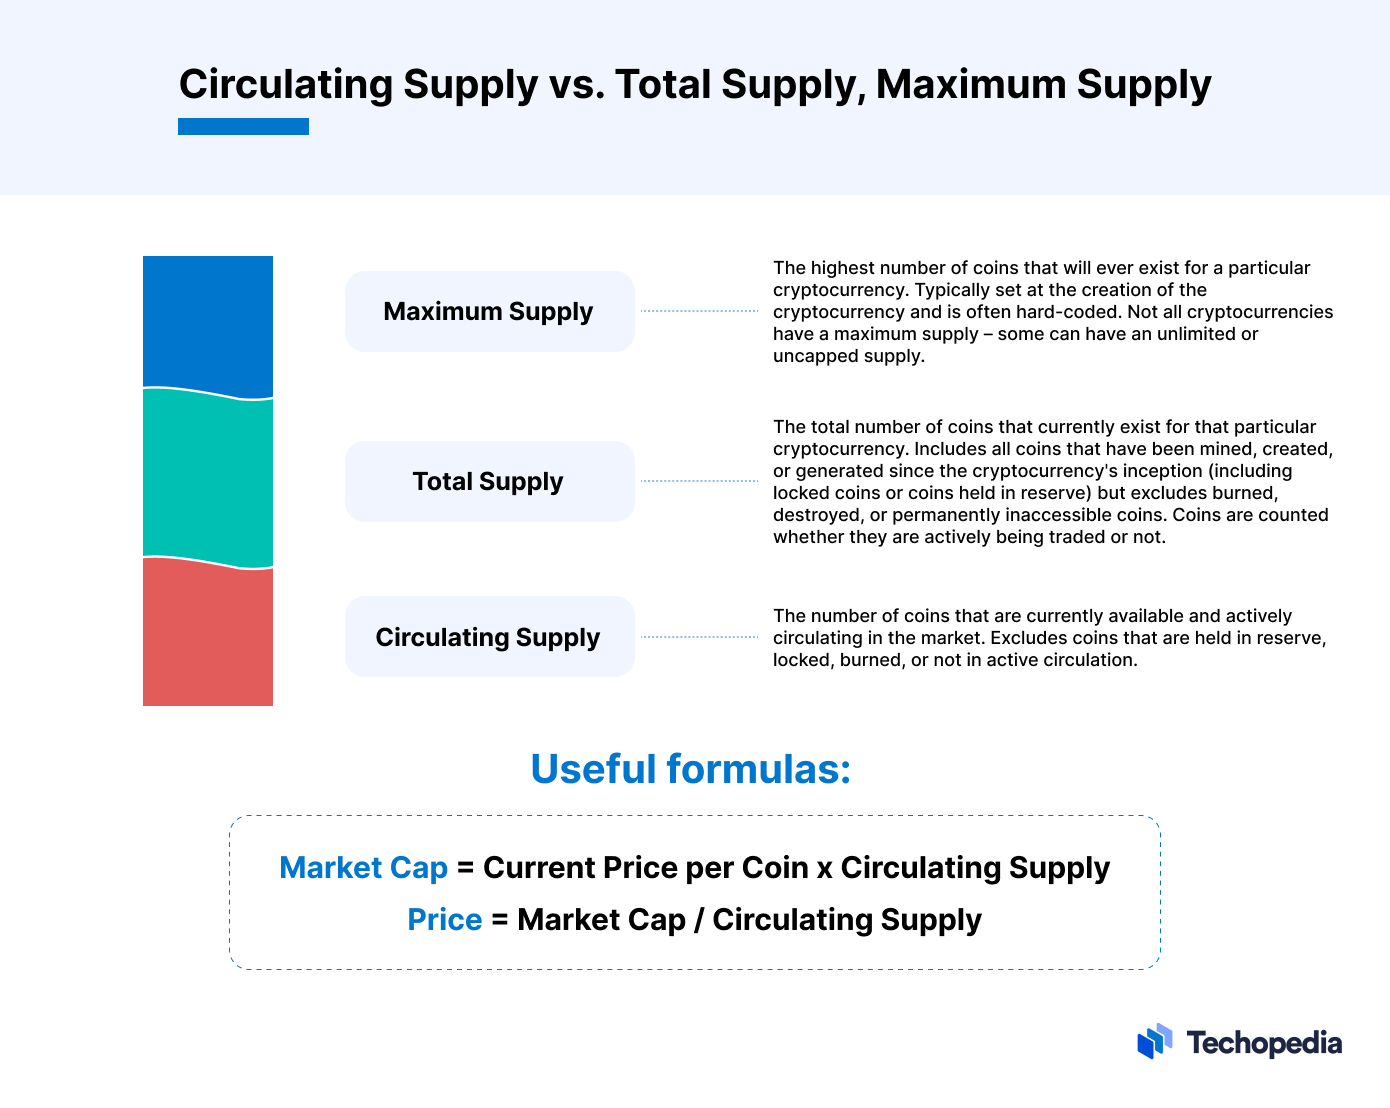 Maximum supply vs Total Supply vs Circulating Supply